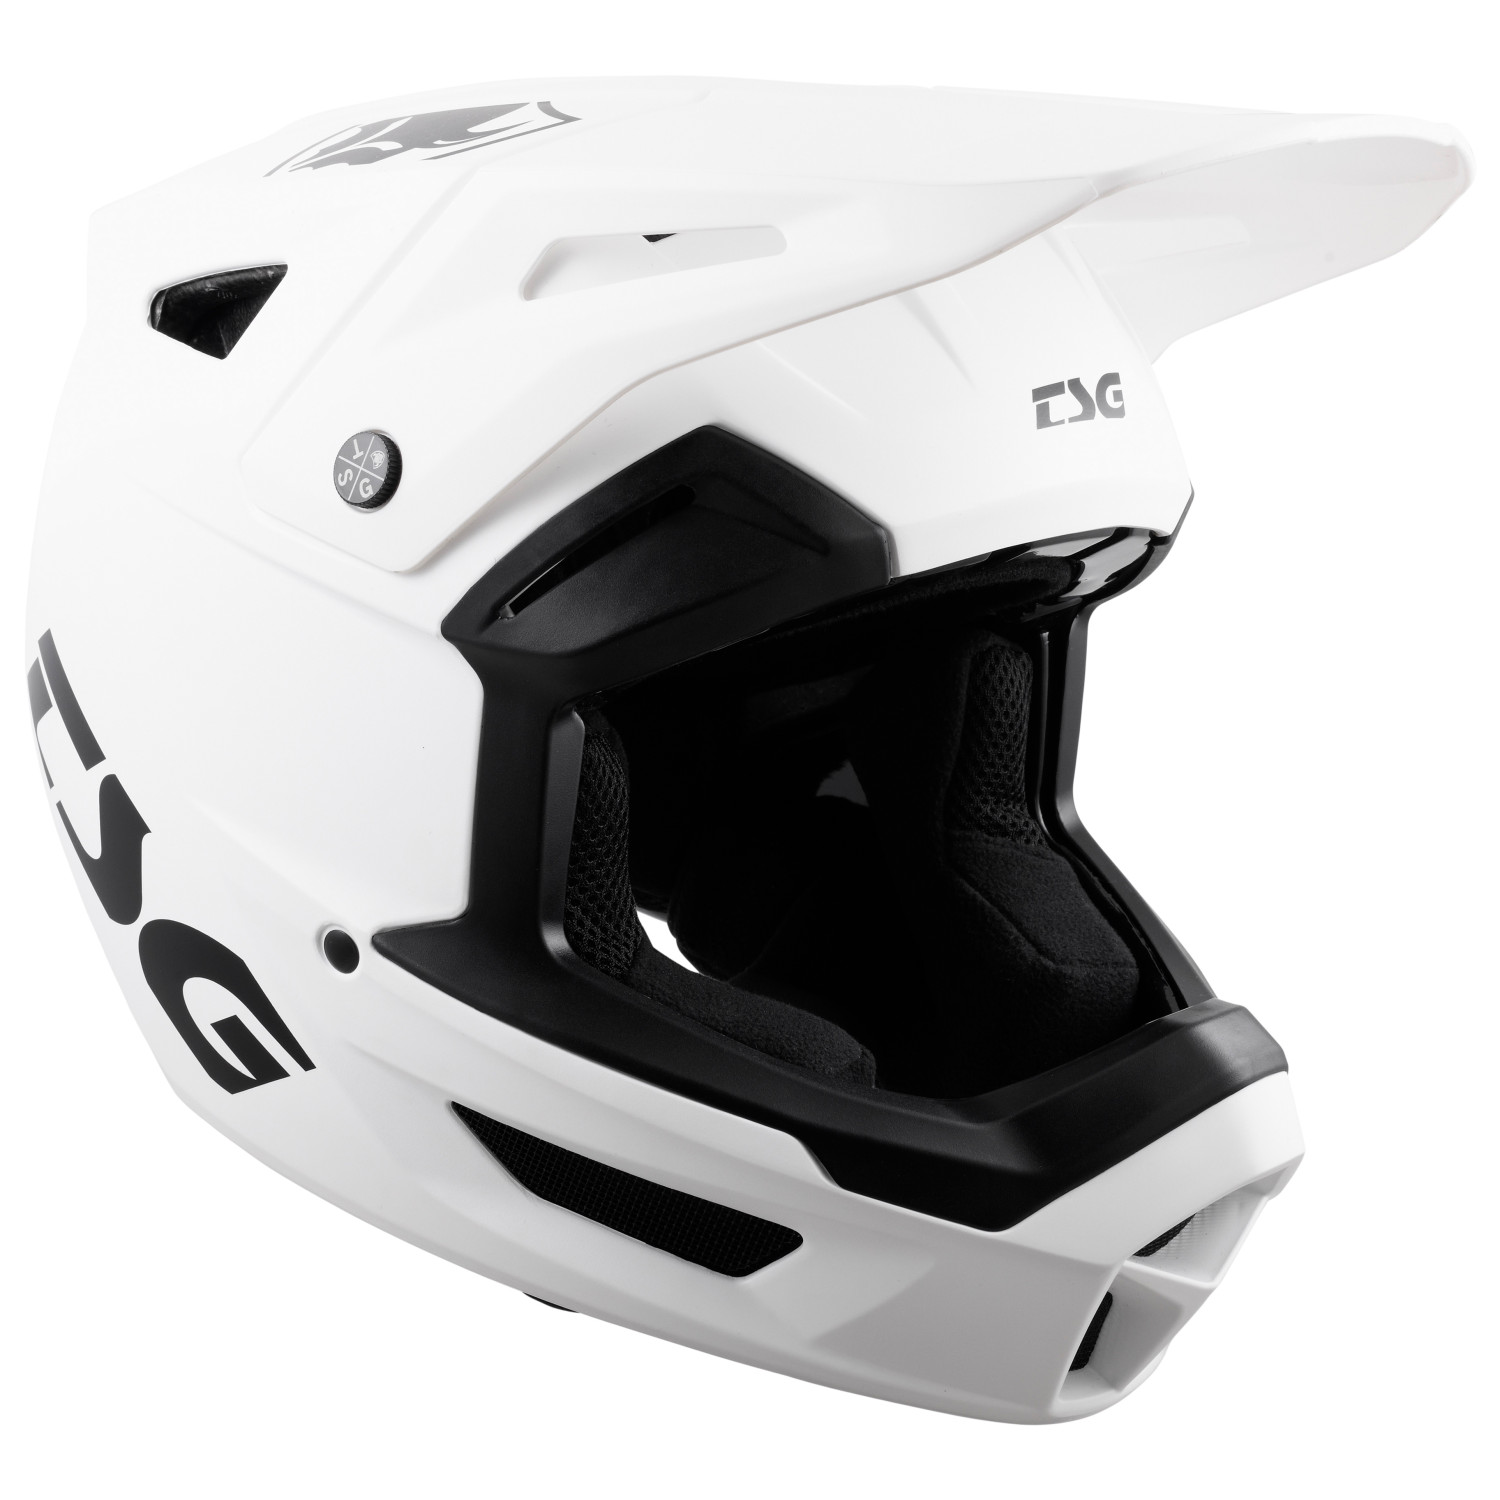 Велосипедный шлем Tsg Sentinel Solid Color, цвет Satin White